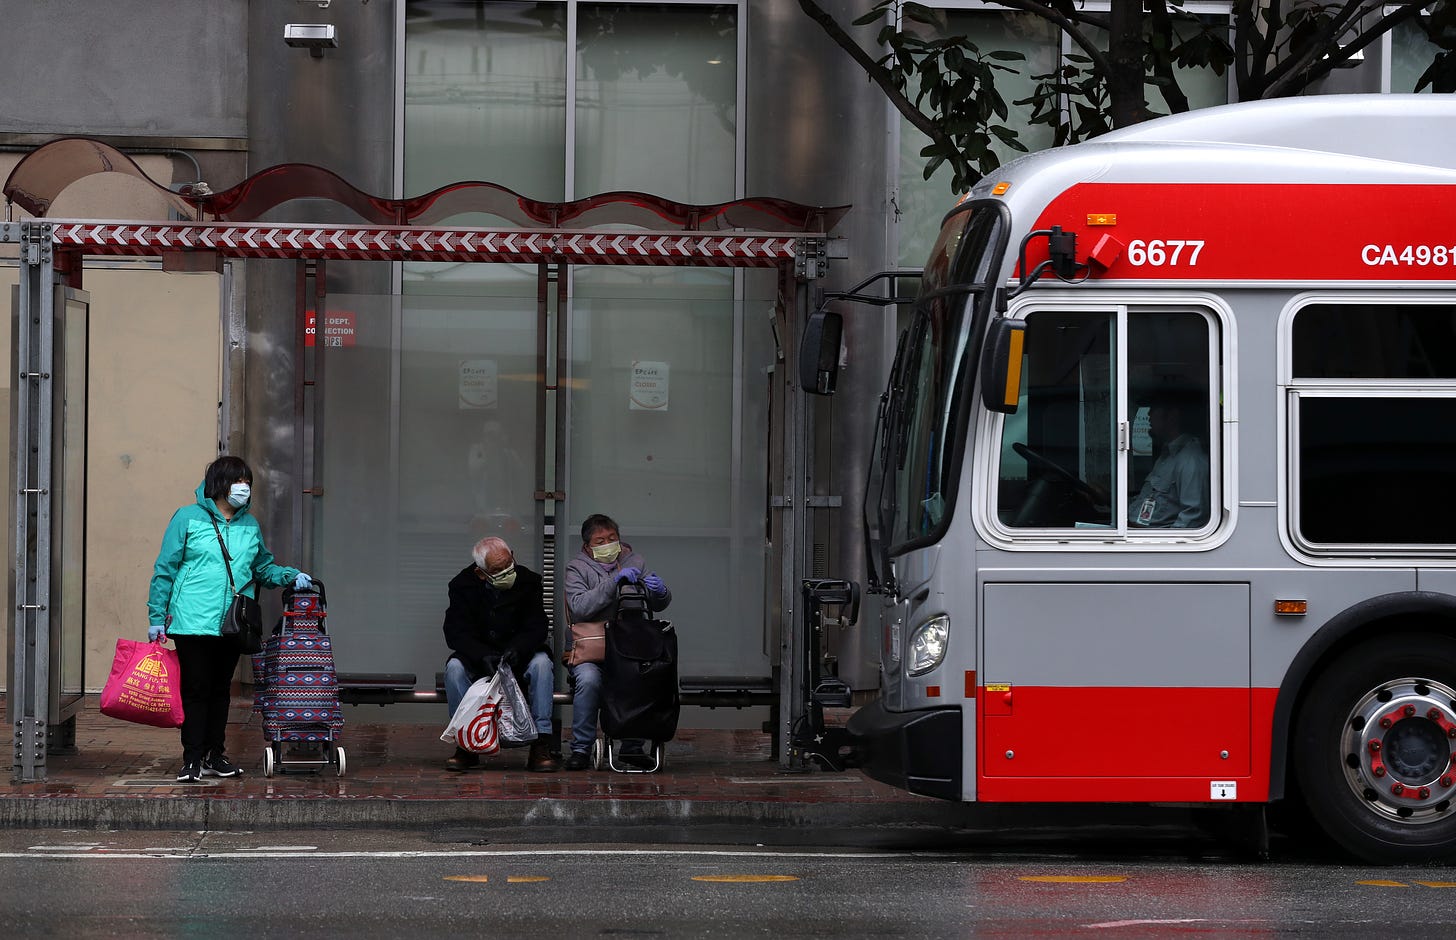 A Muni bus in San Francisco